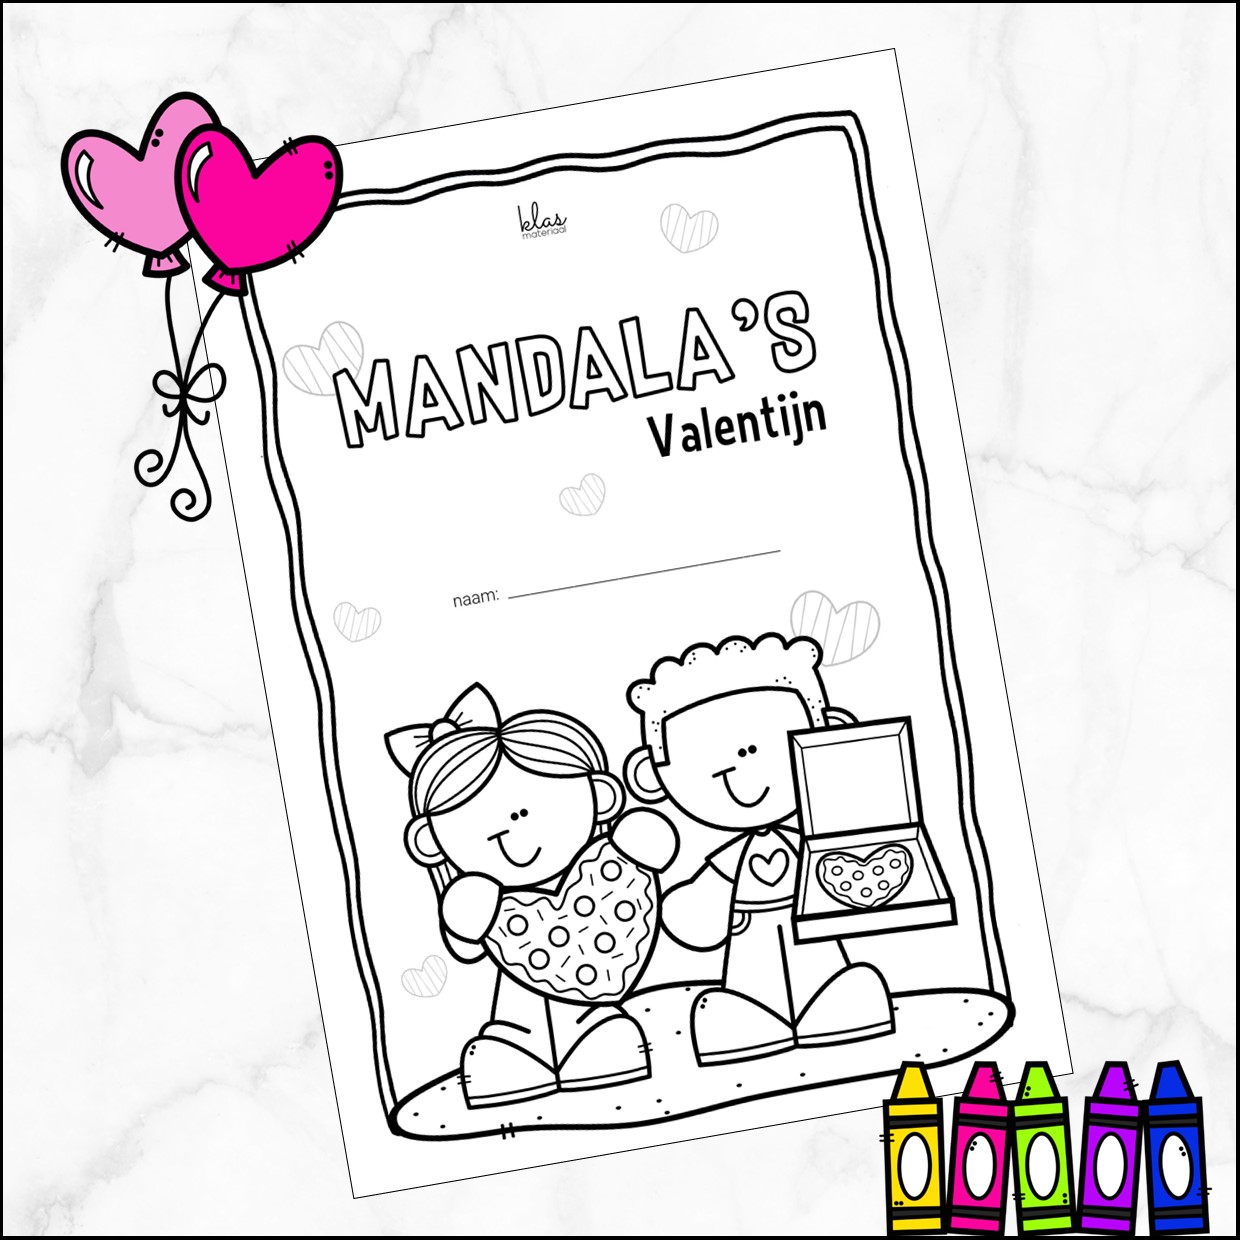 Mandala’s valentijn